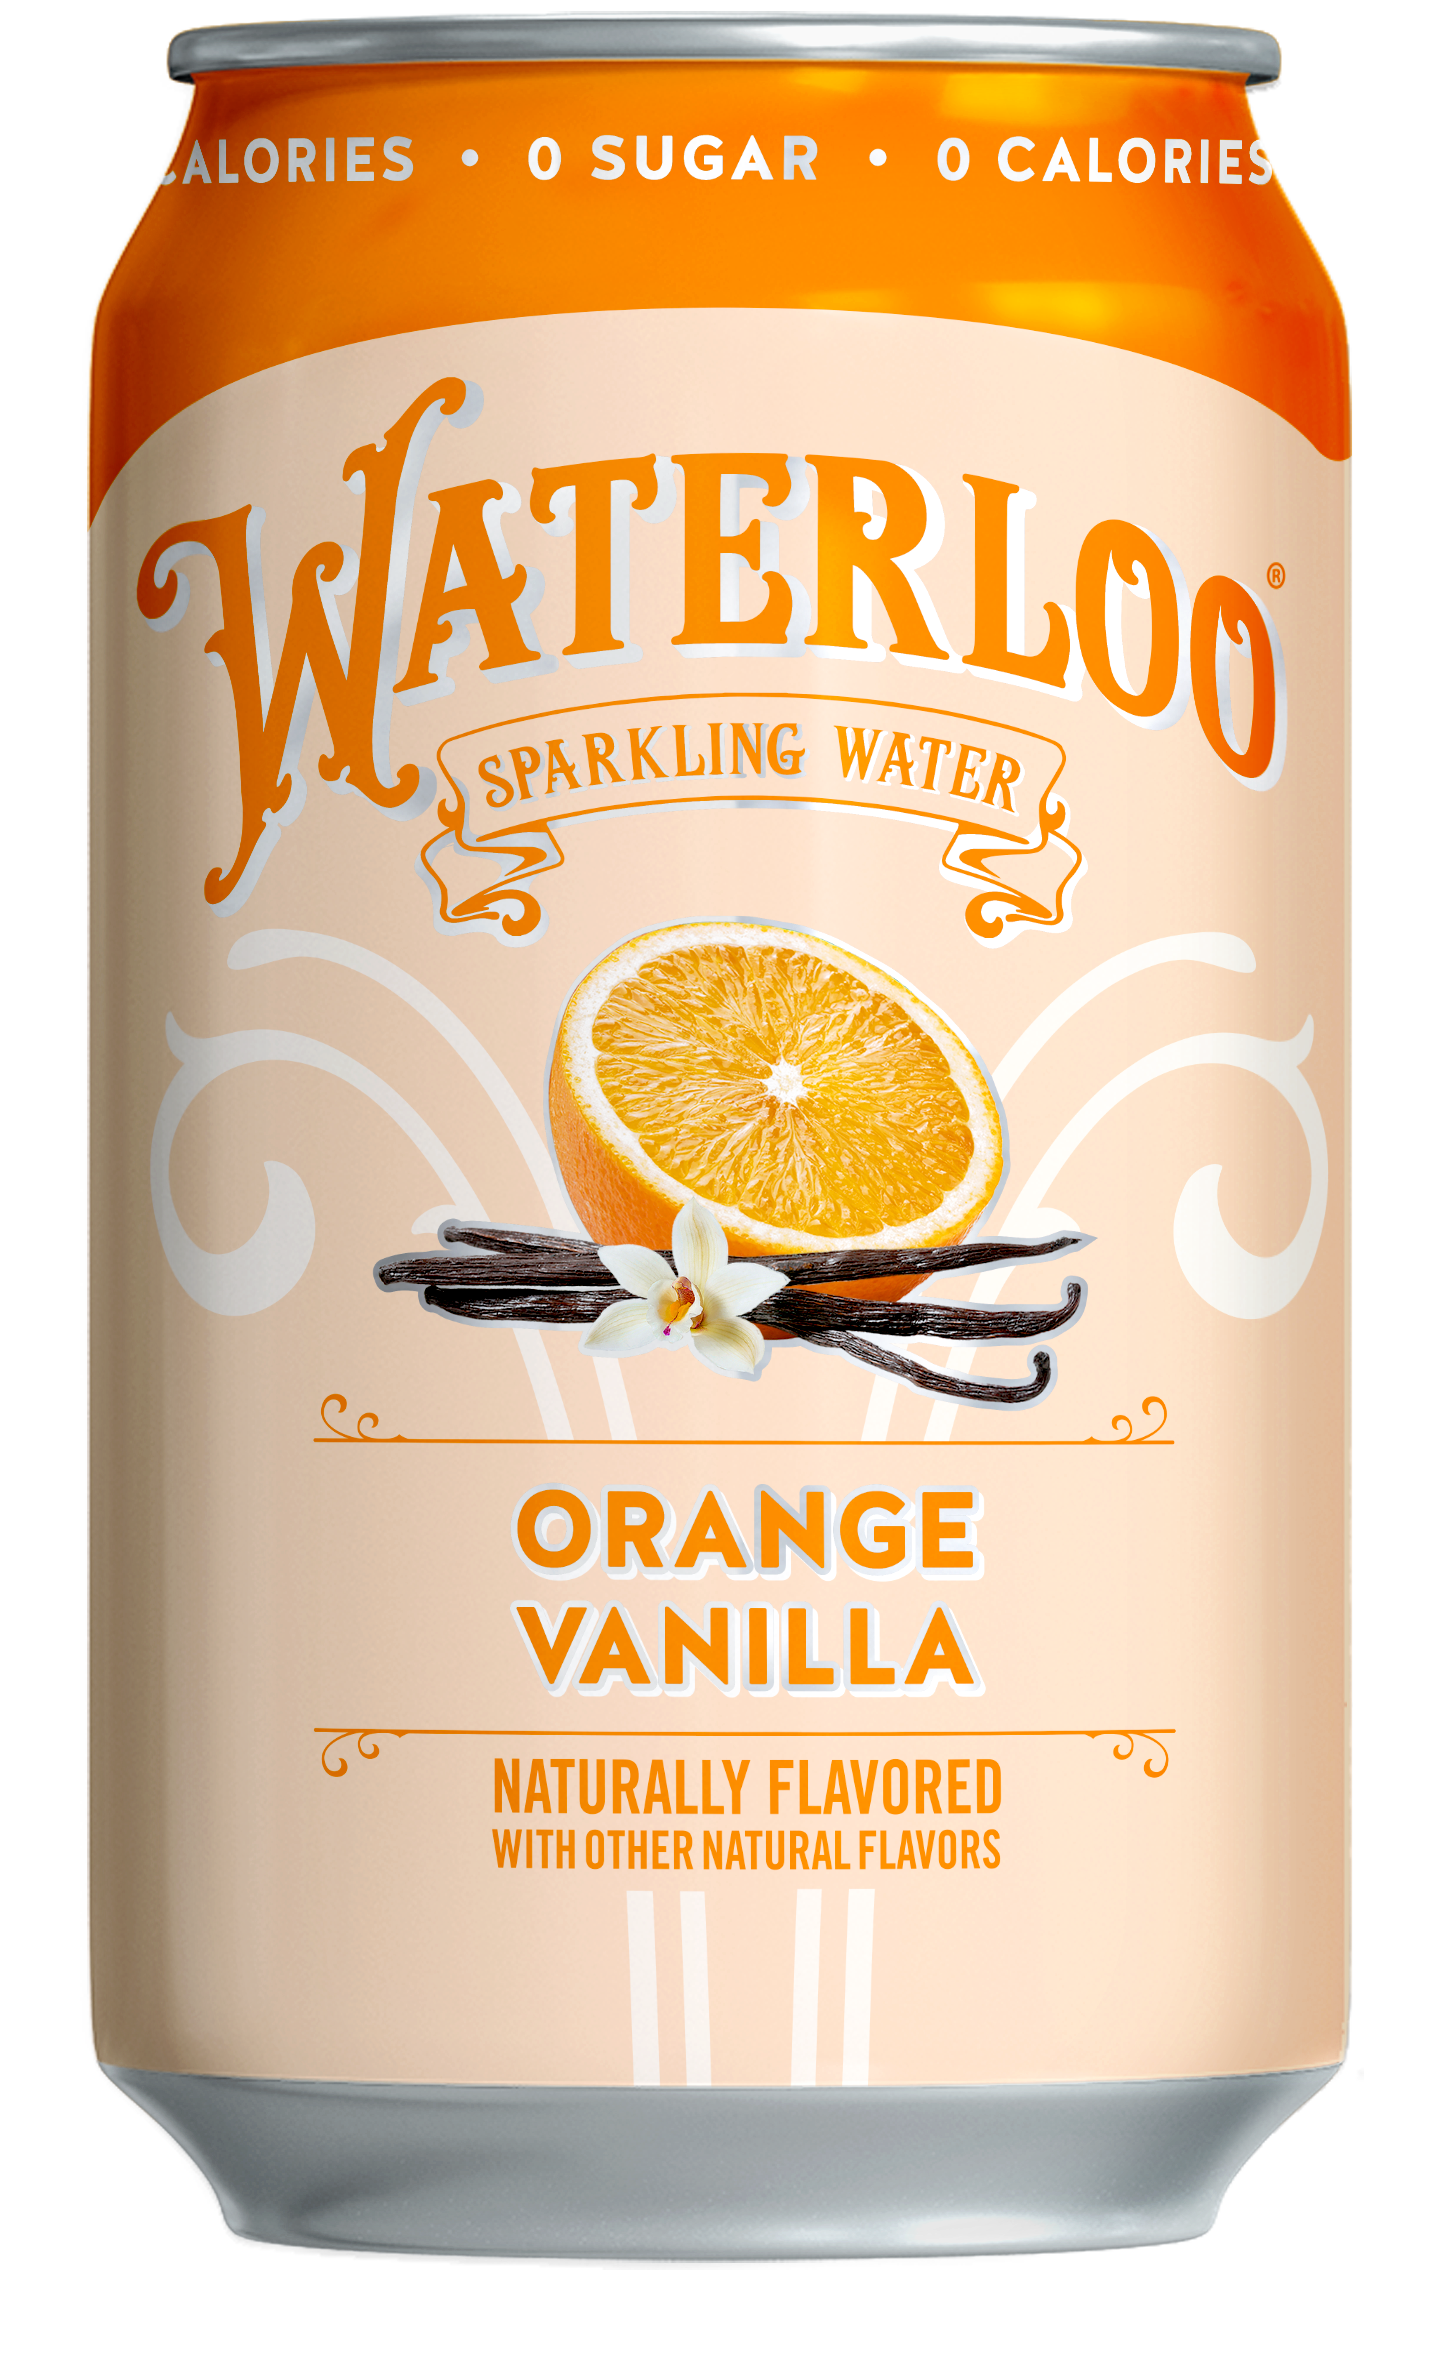 Waterloo Orange Vanilla Sparkling Water 2 innerpacks per case 144.0 fl